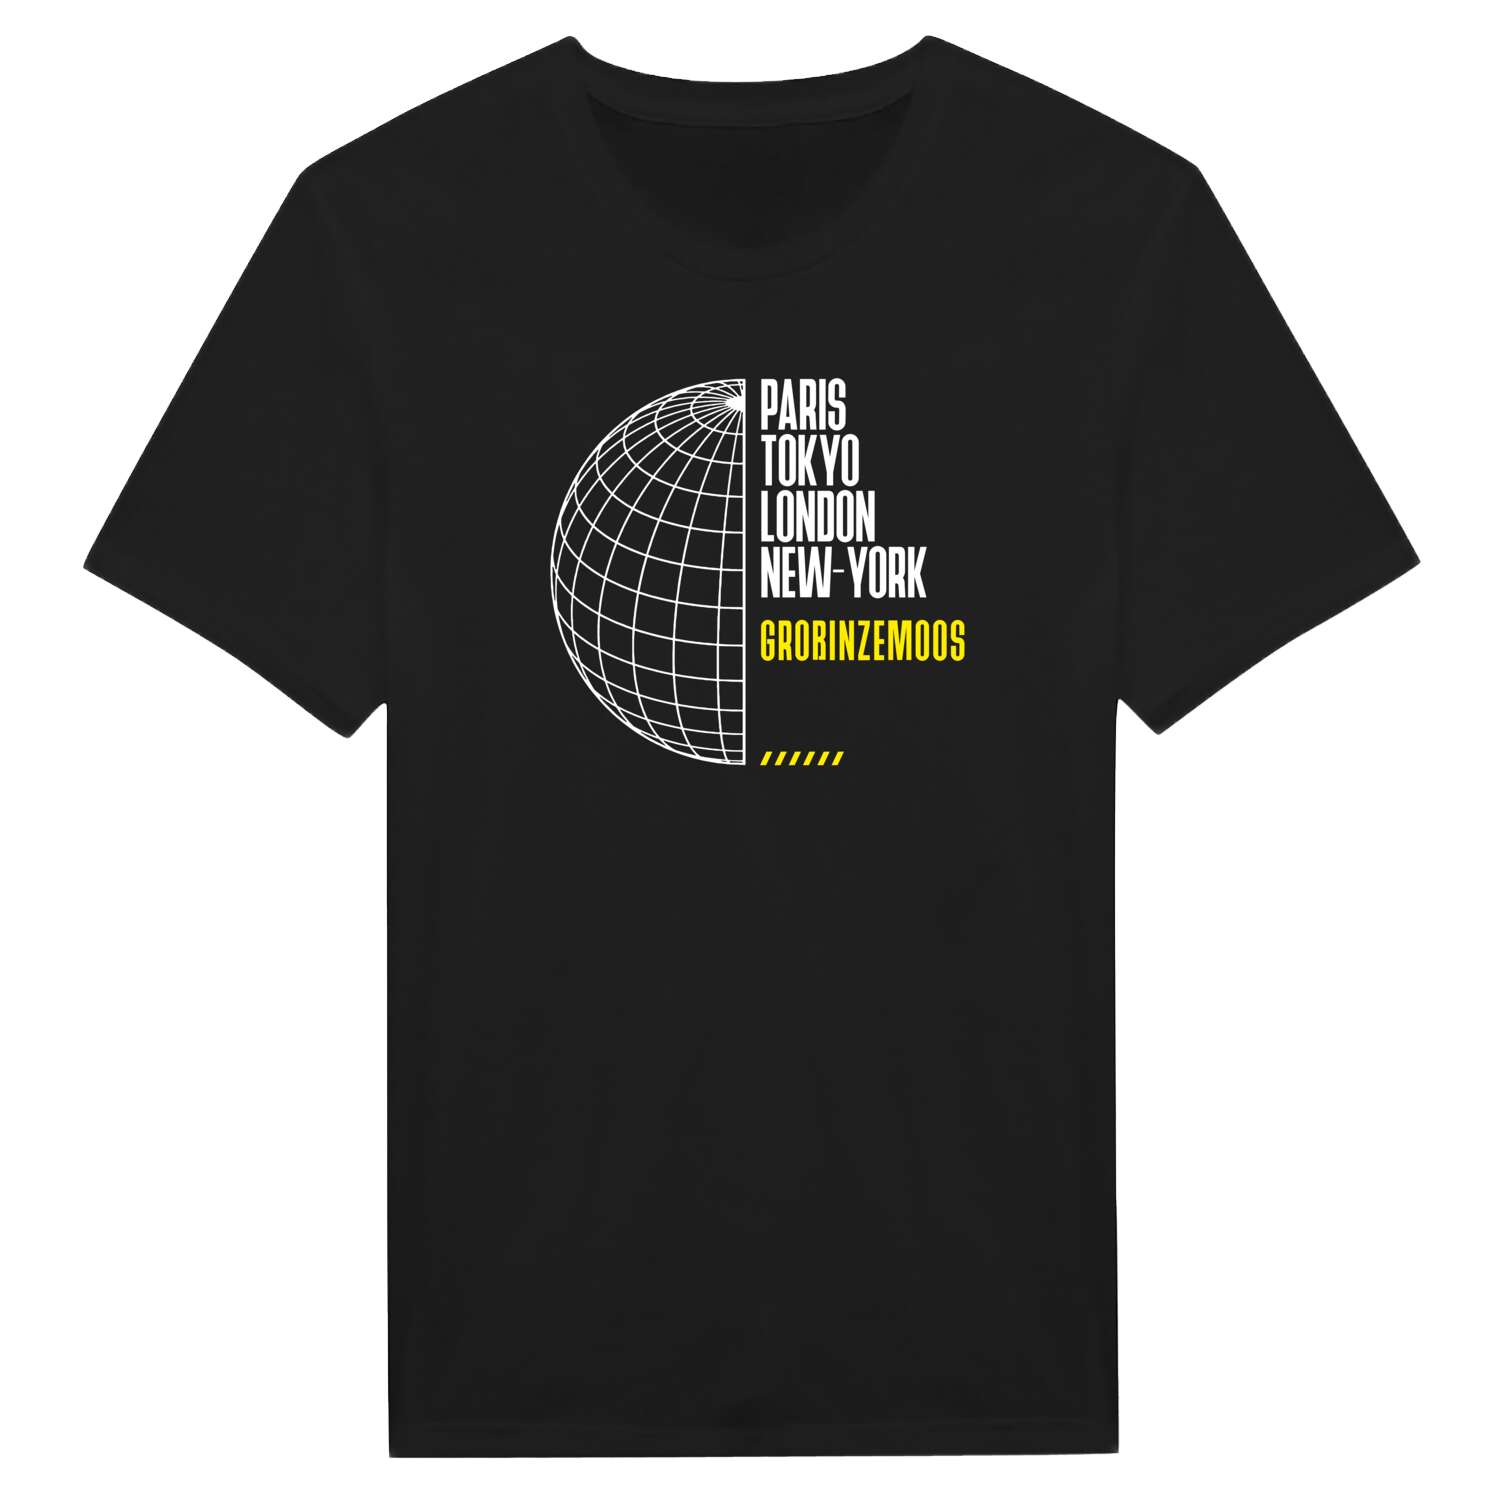 Großinzemoos T-Shirt »Paris Tokyo London«